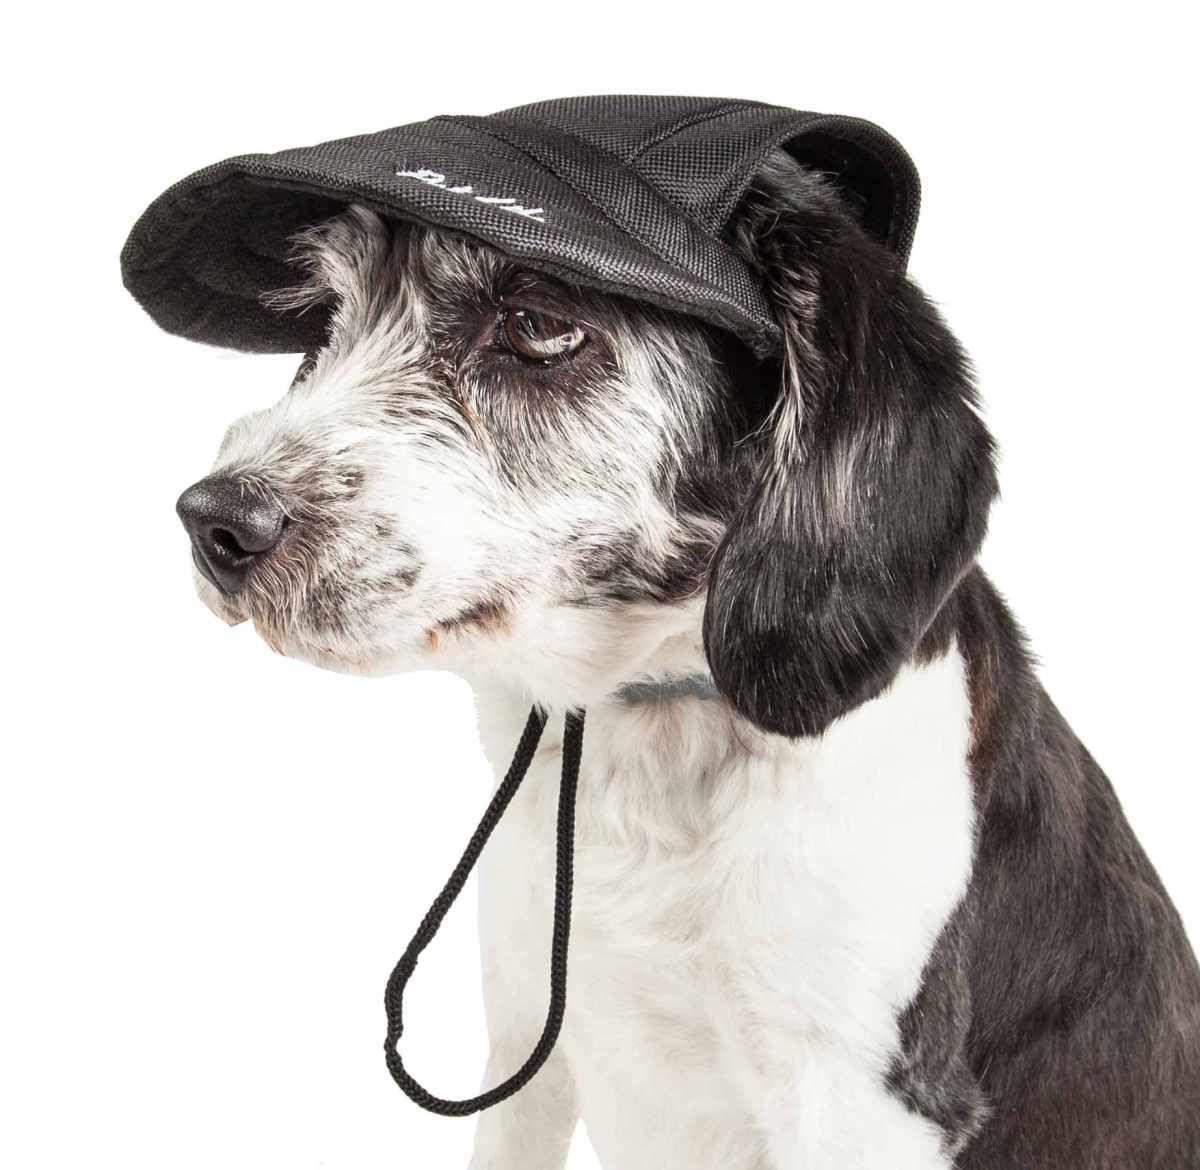 Picture of Pet Life HT6BKMD Cap-Tivating UV Protectant Adjustable Fashion Dog Hat - Jet Black, Medium